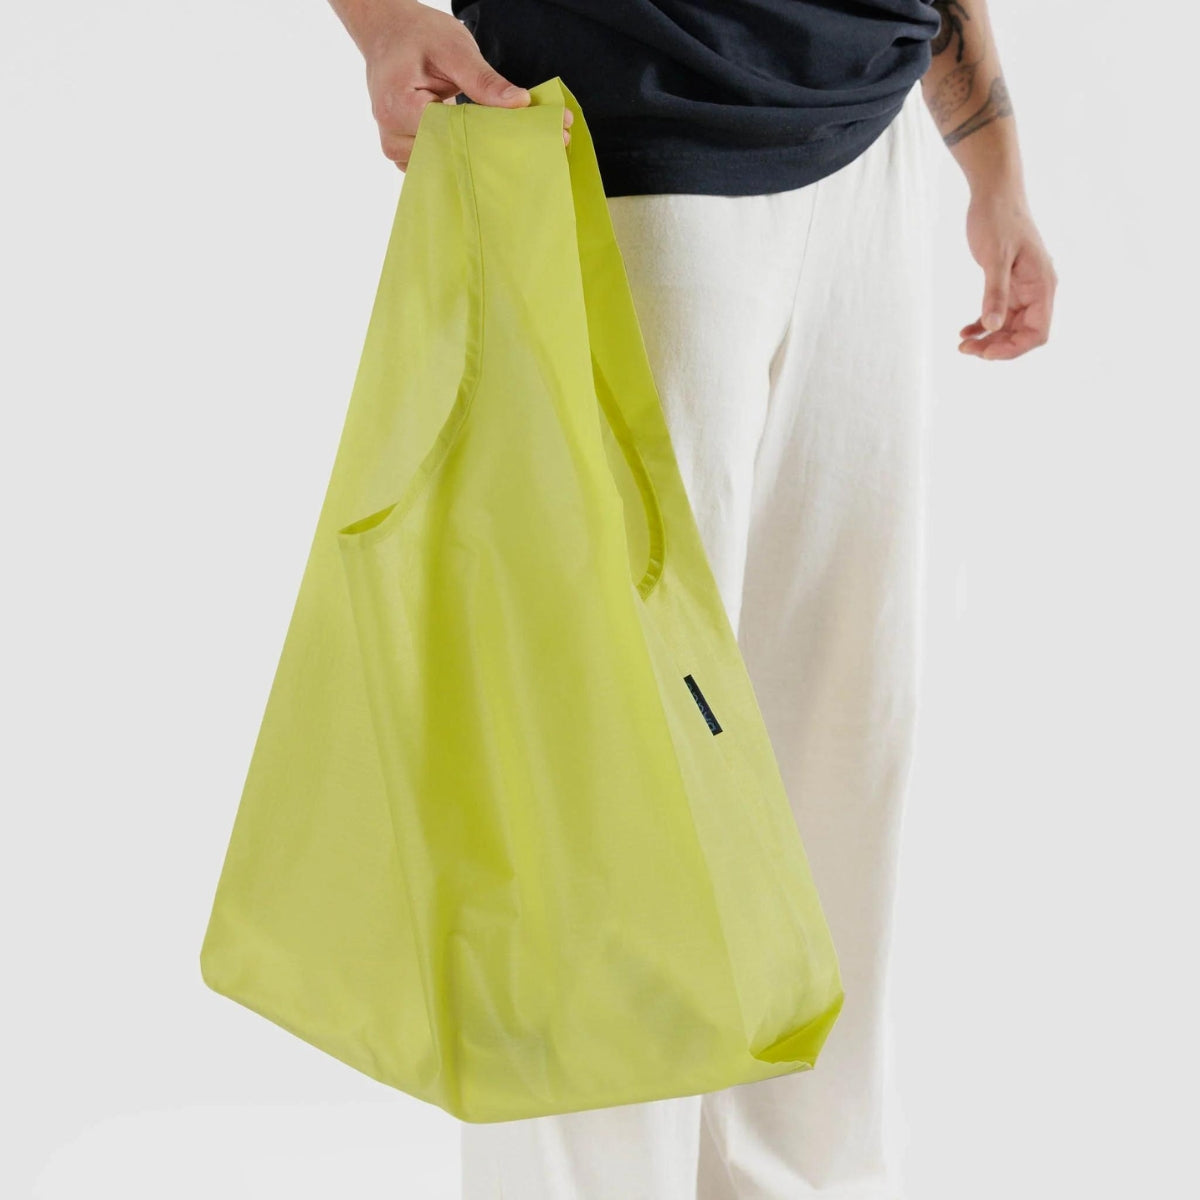 Baggu Standard Bag in Lemon Curb